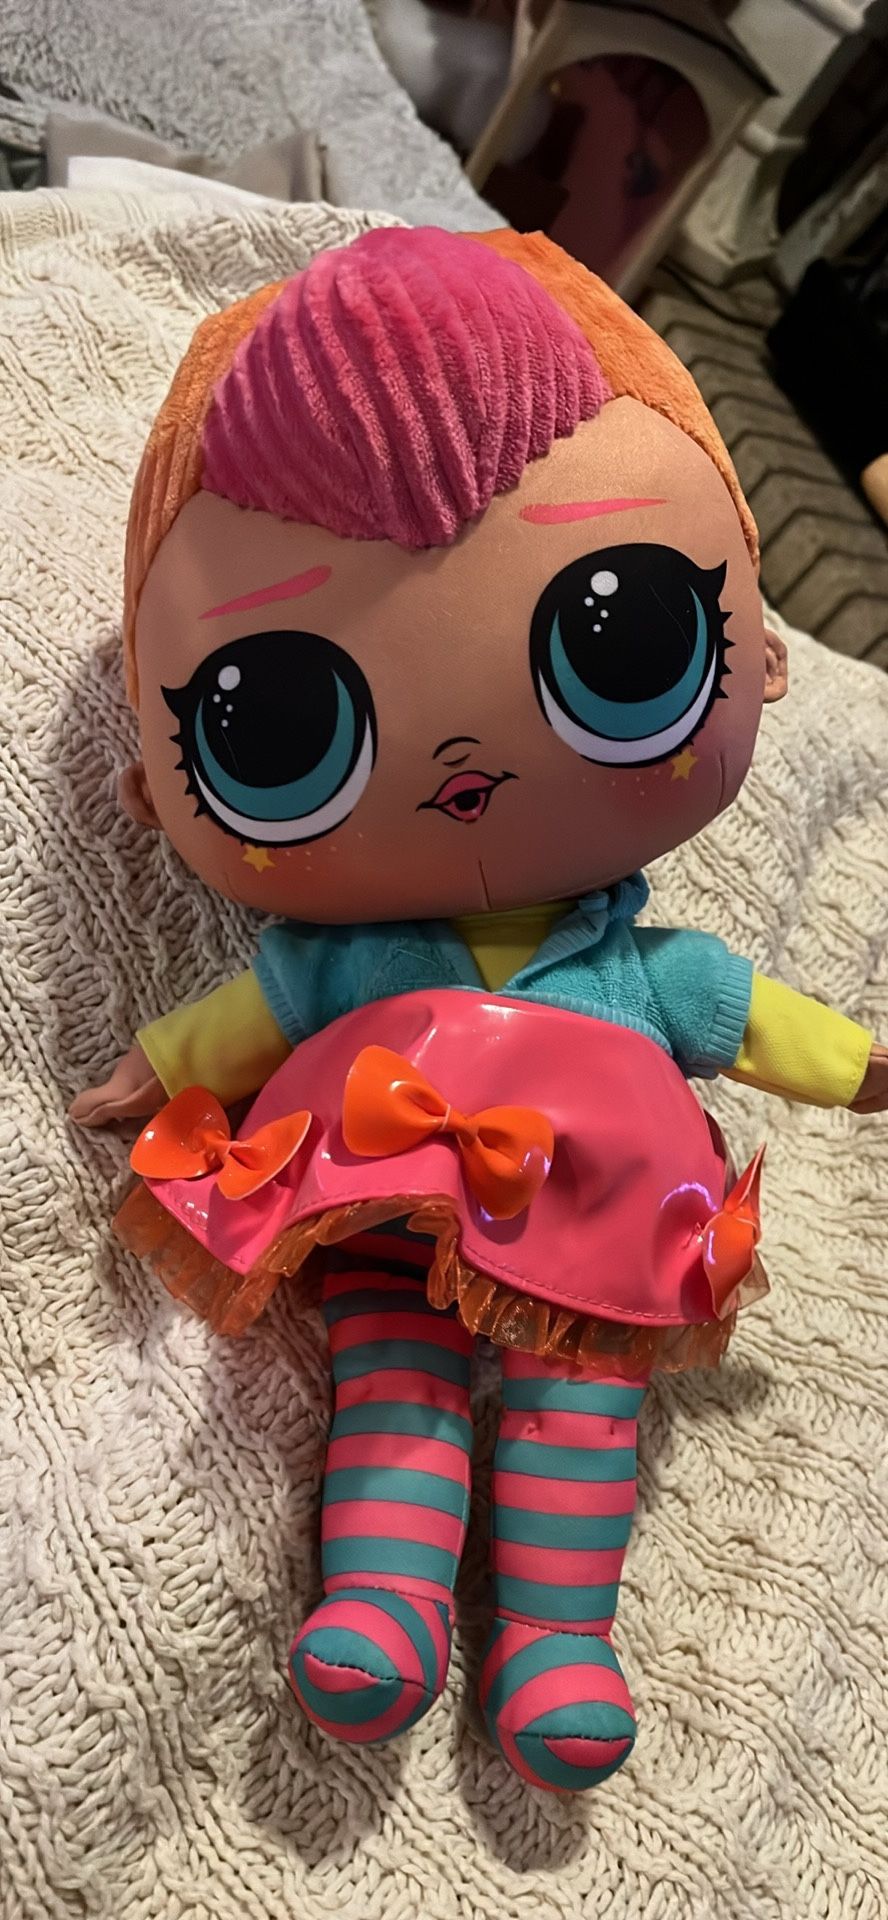 L. O.L. Surprise! Neon Q.T. – Huggable, Soft Plush Doll. Toy . 